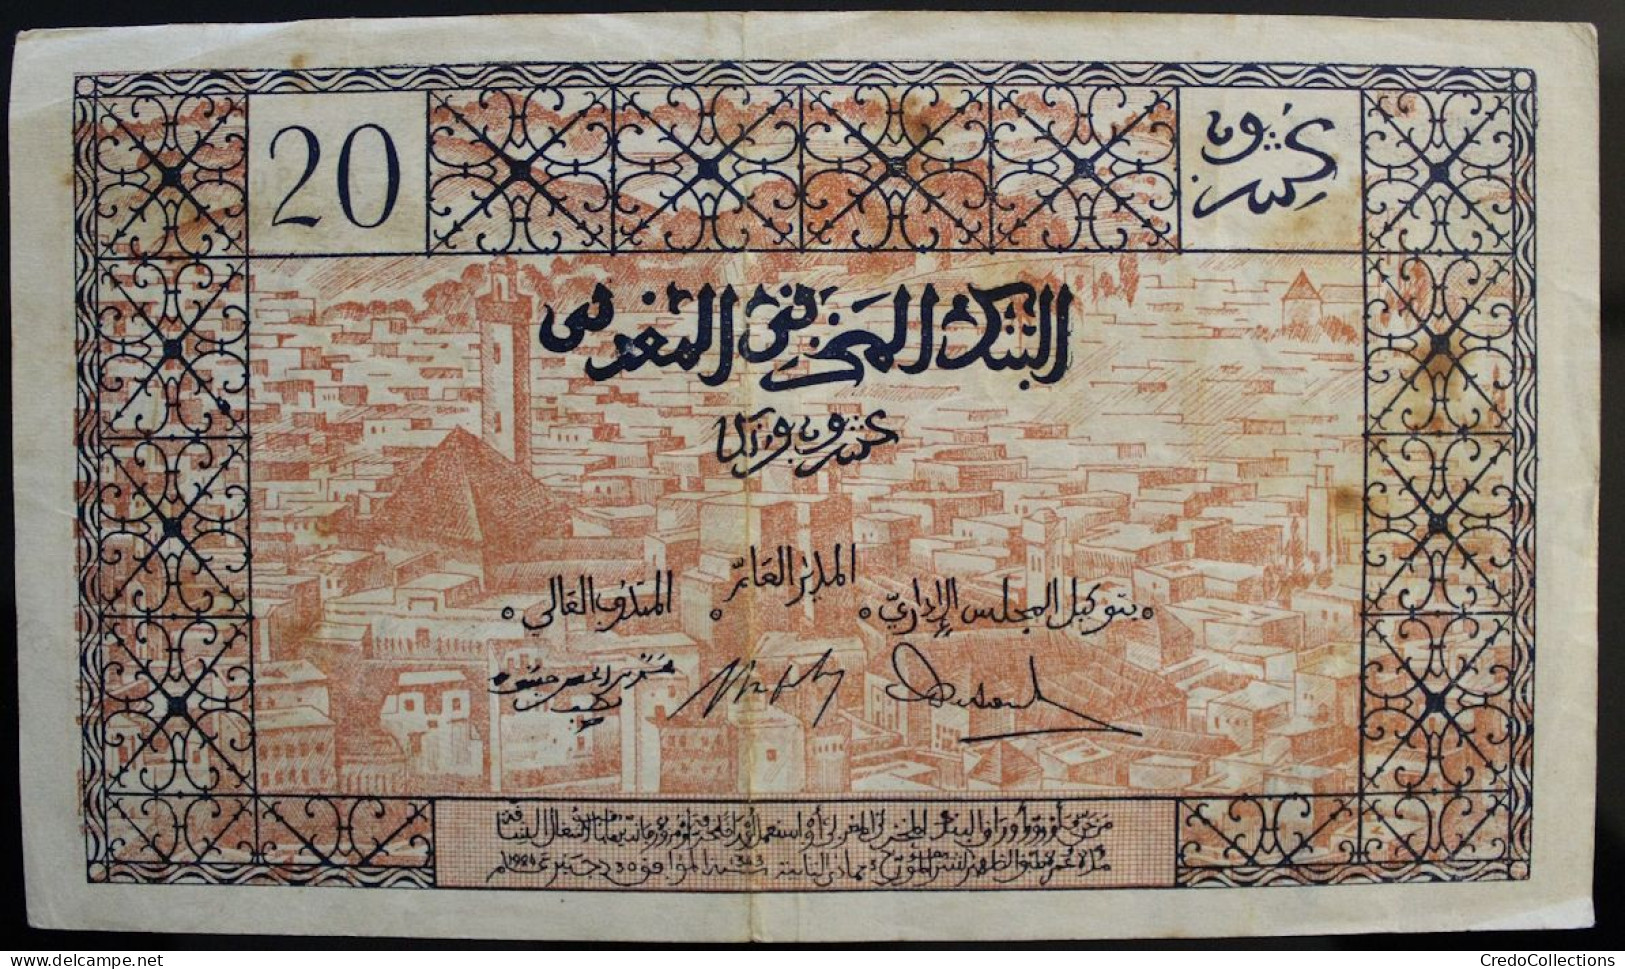 Maroc - 20 Francs - 1943 - PICK 39 - TTB - Marocco